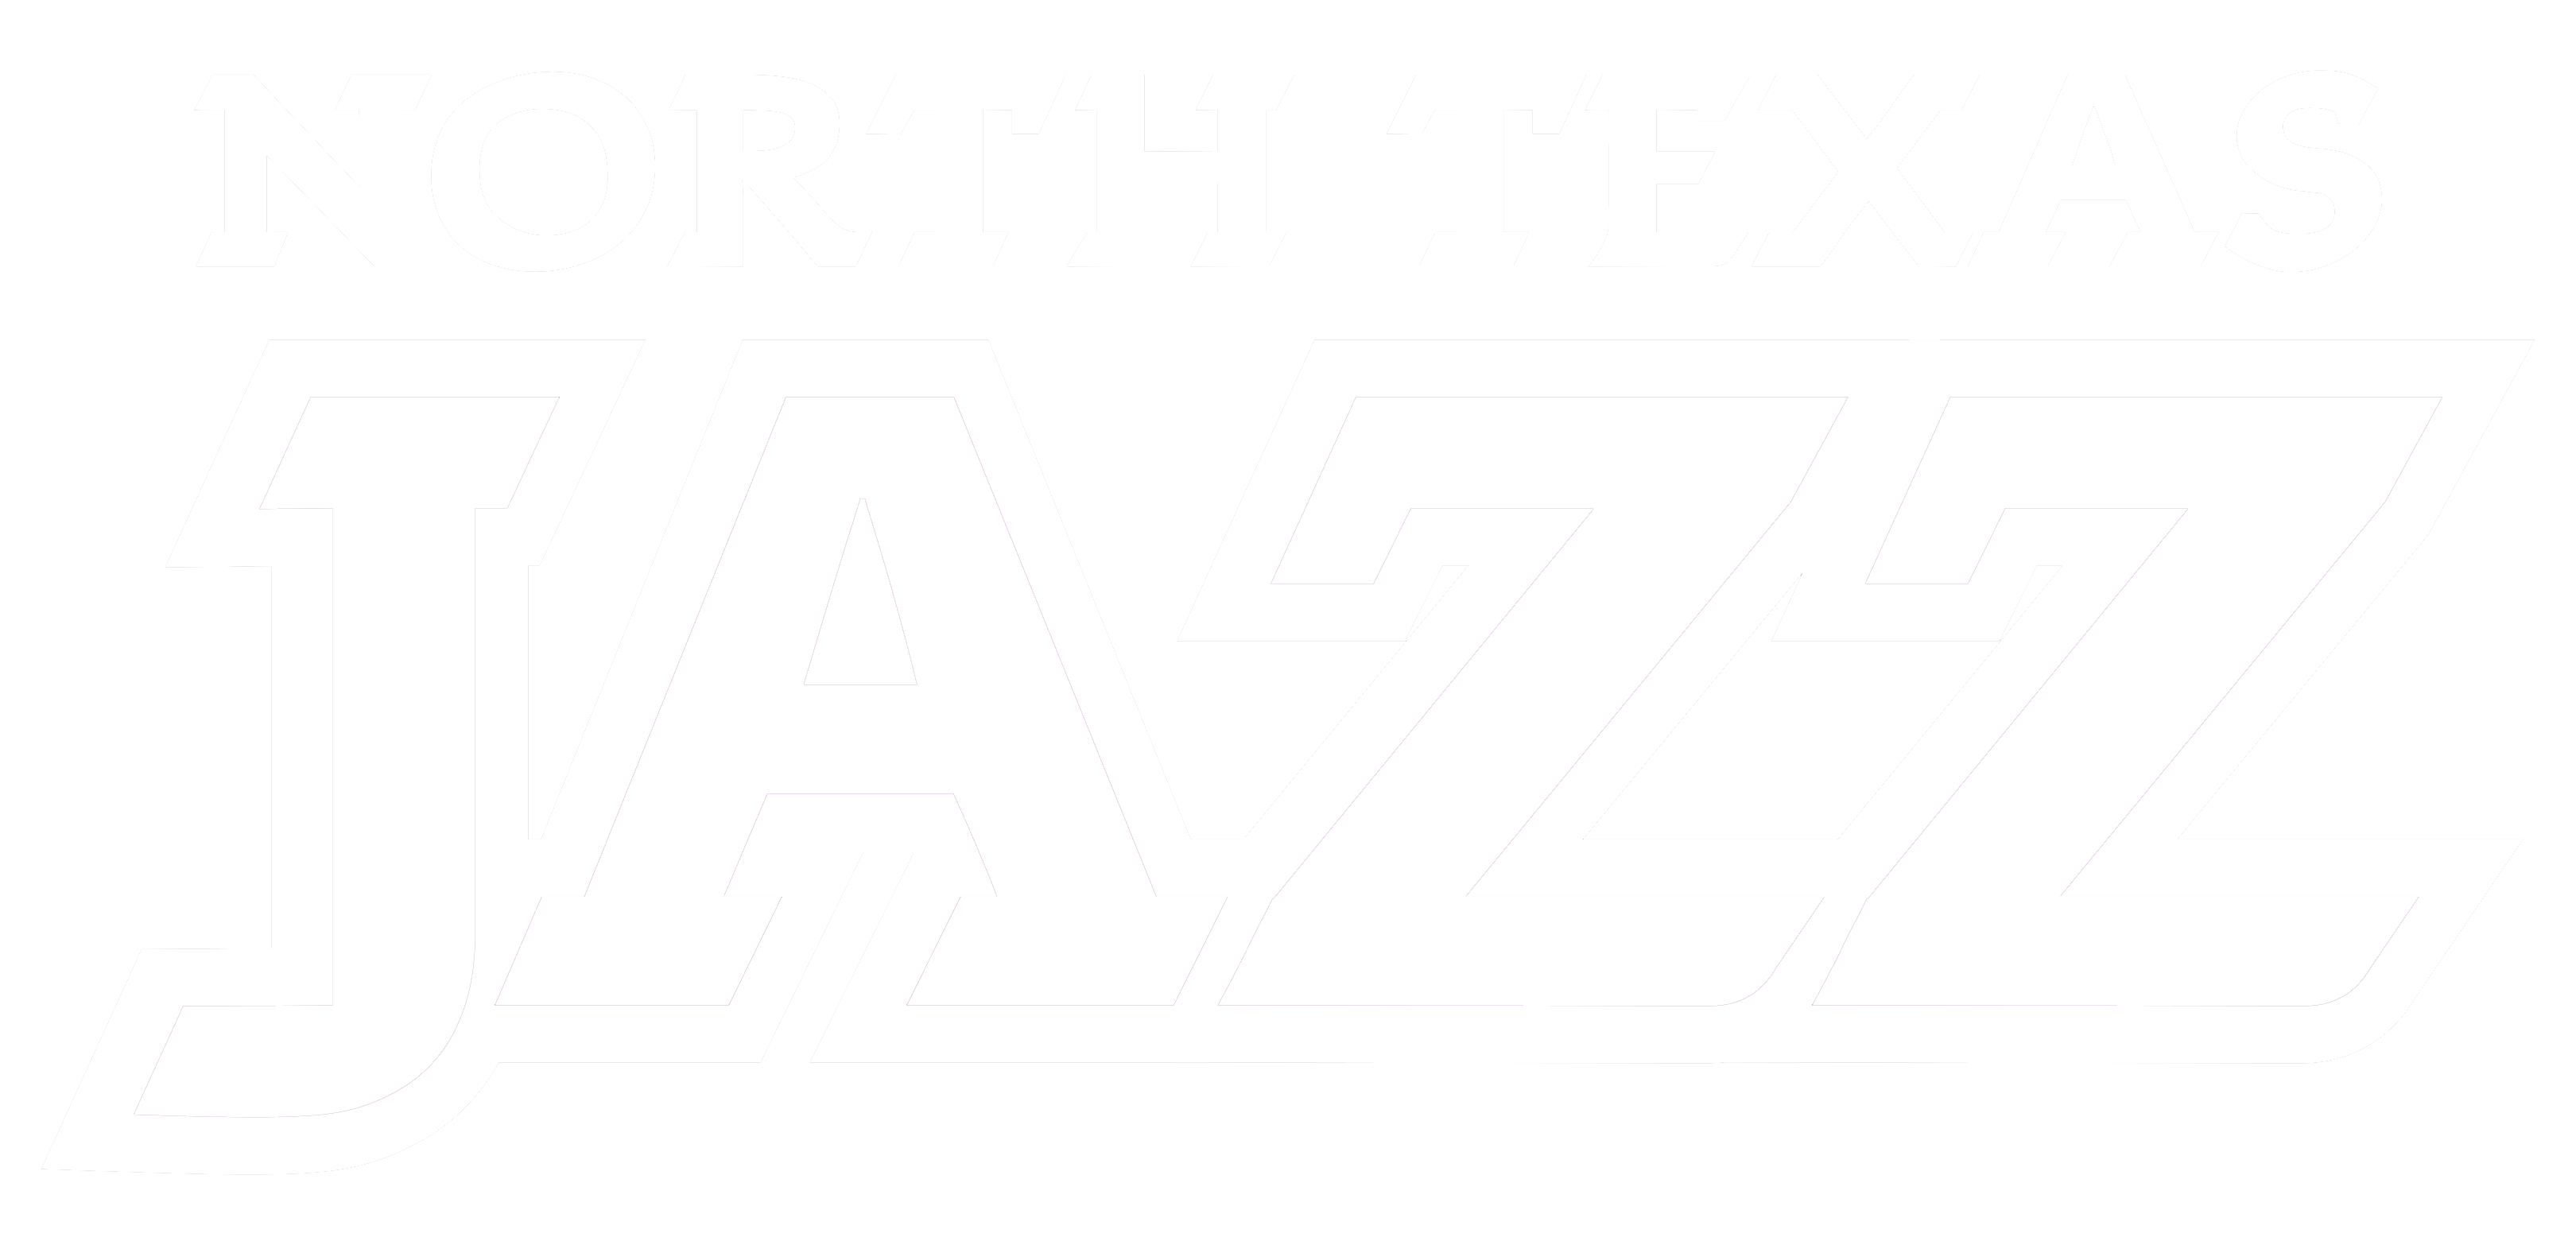 2010s Jazz logo